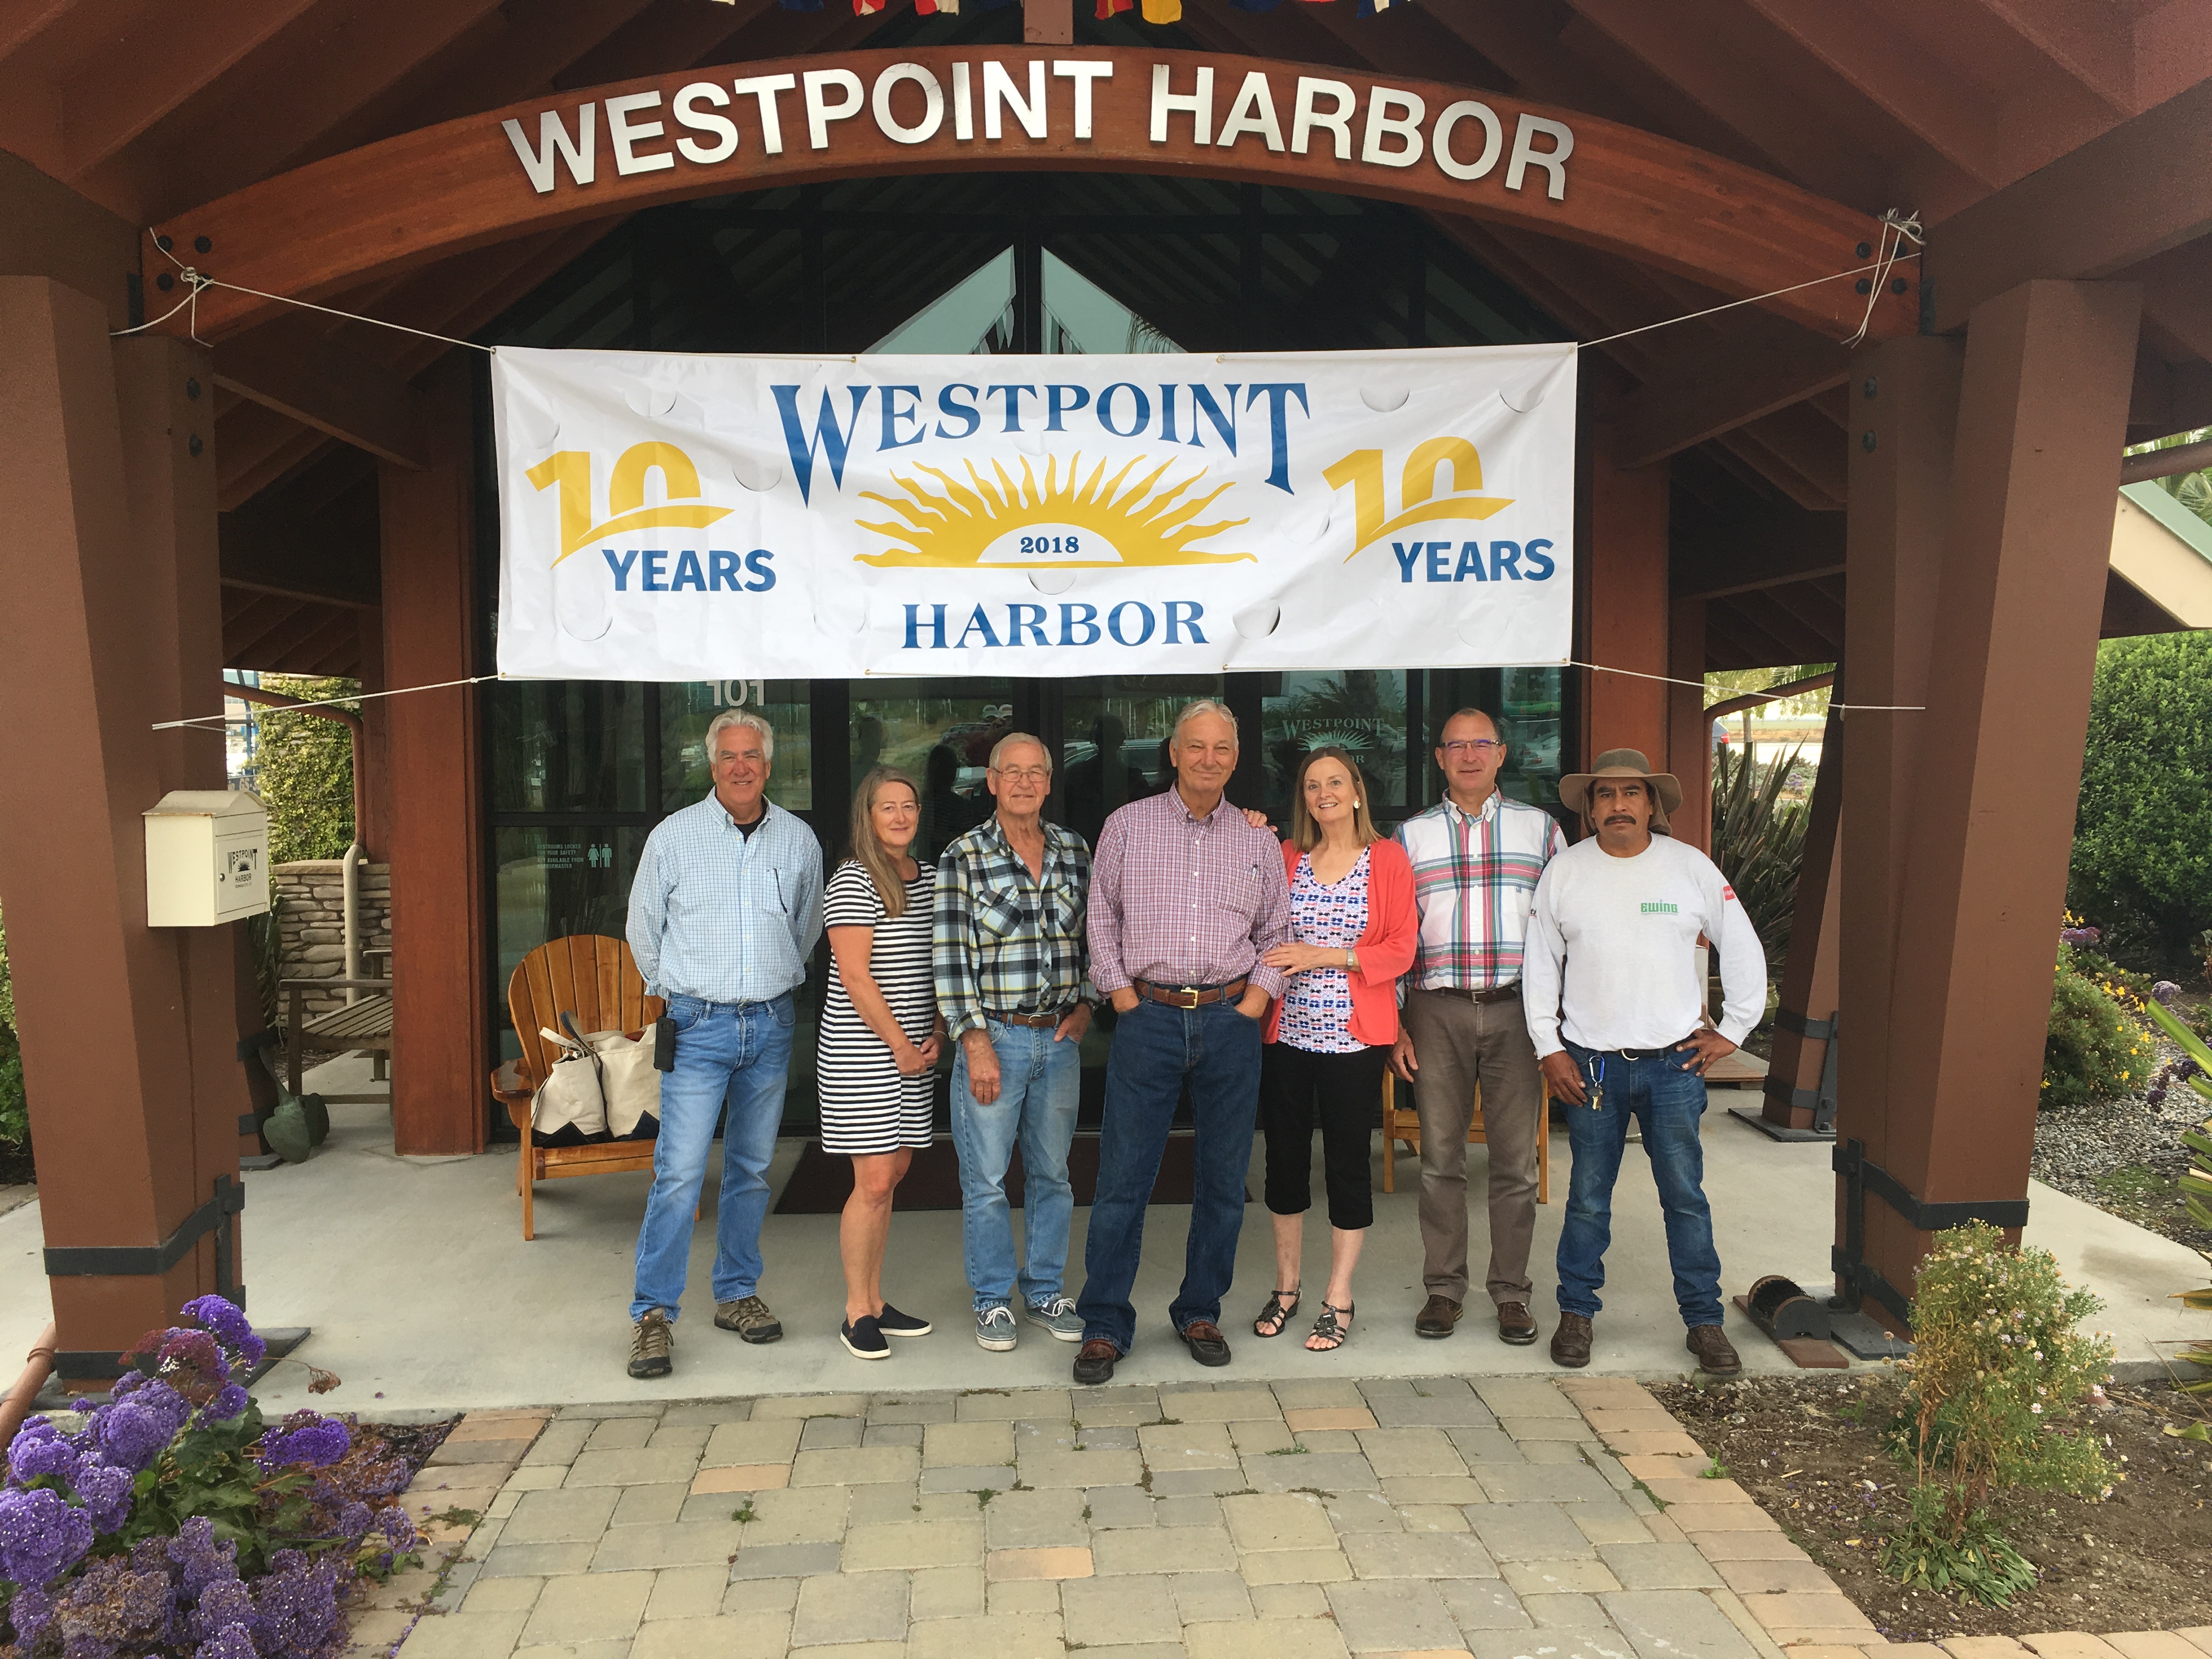 Westpoint Harbor Celebrates 10 Years -- 2008 to 2018